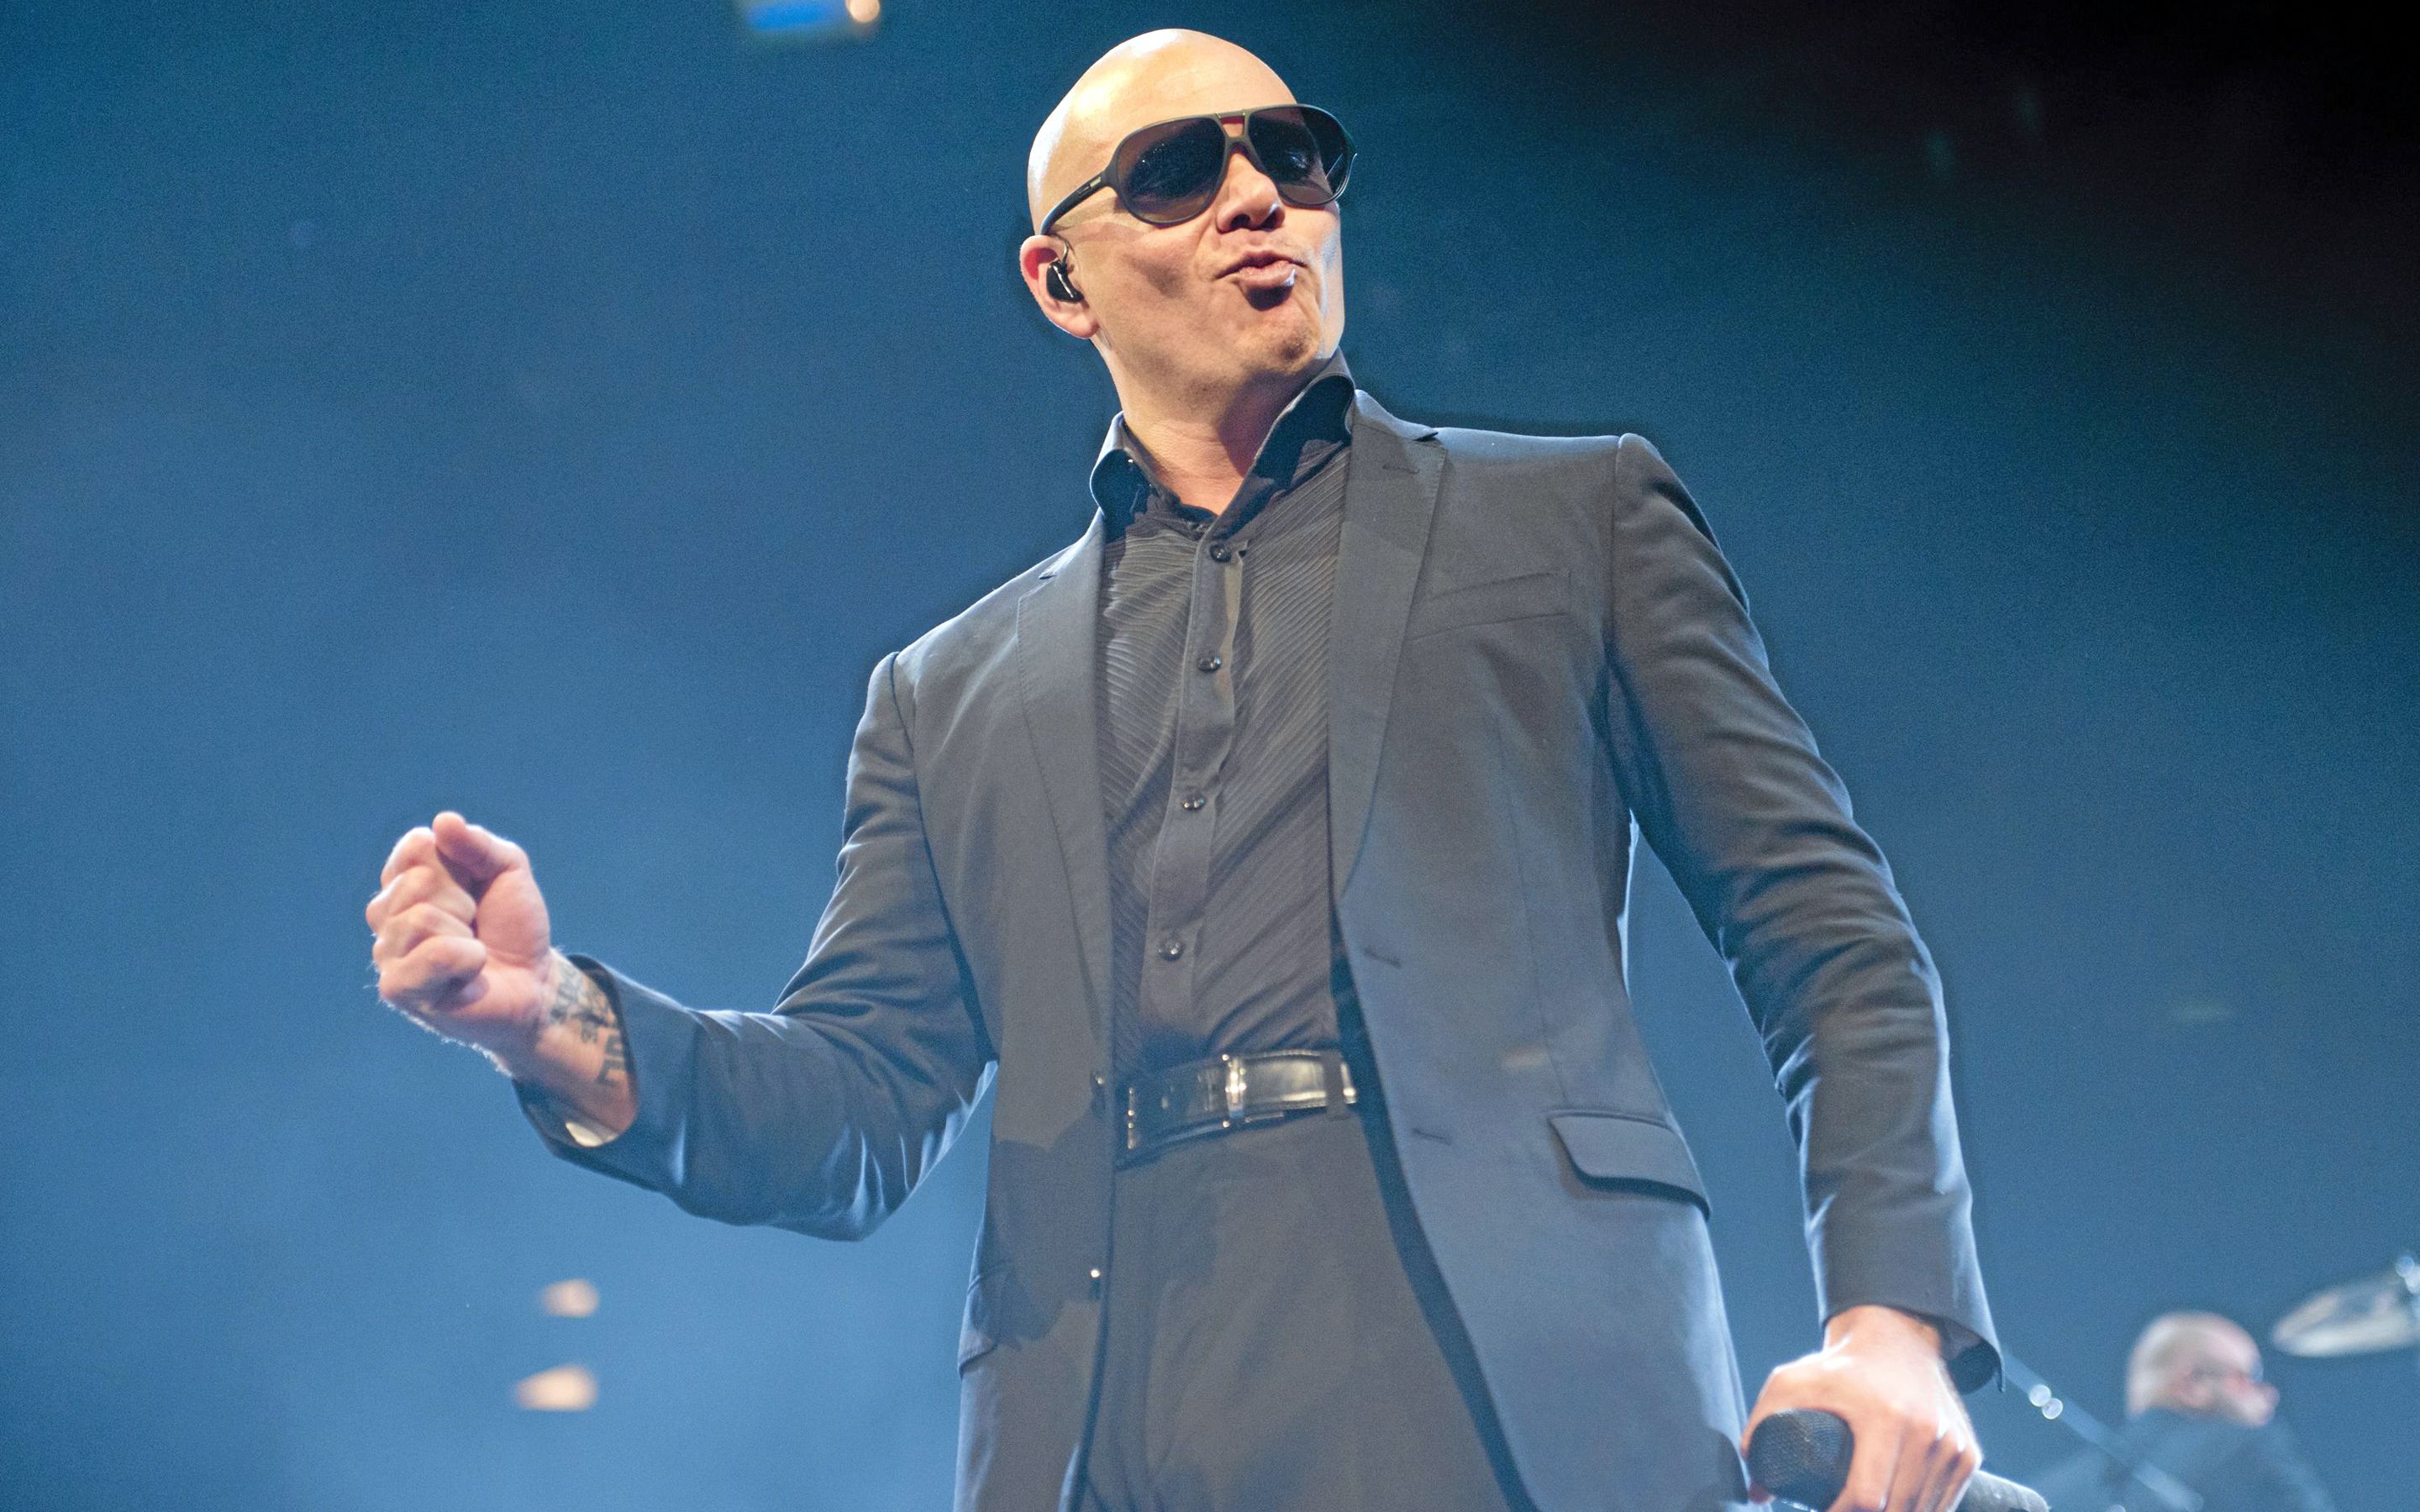 Download wallpaper Pitbull, superstars, american singer, Armando